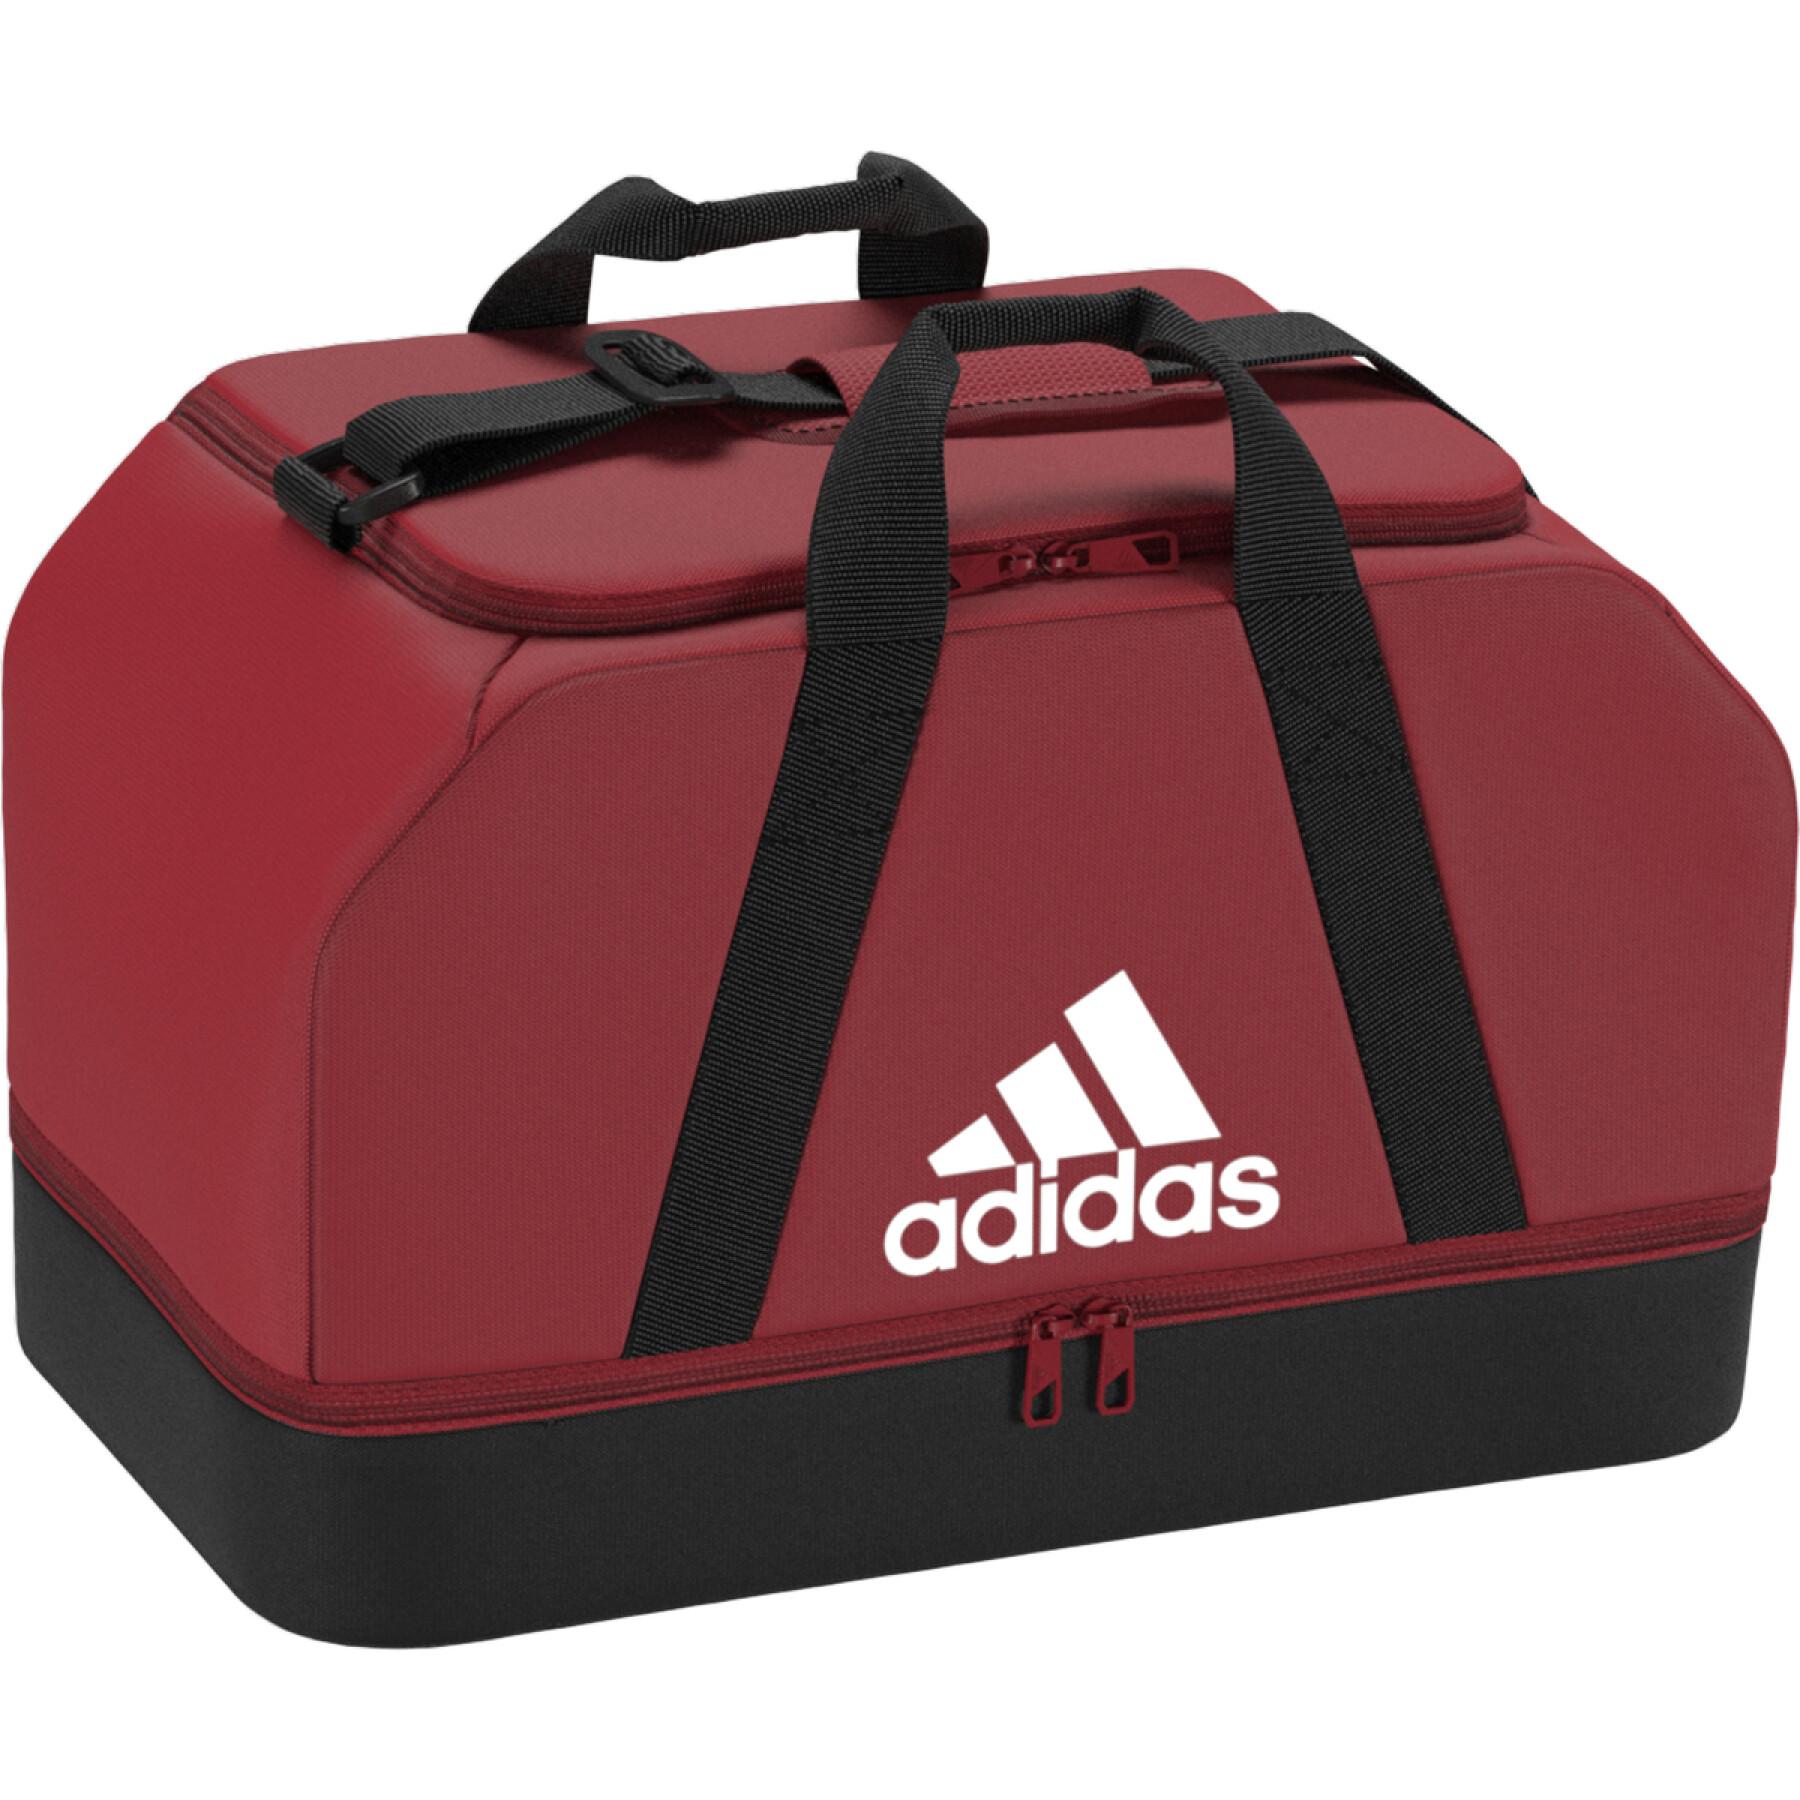 Borsa sportiva adidas Tiro Primegreen Bottom Compartment Small